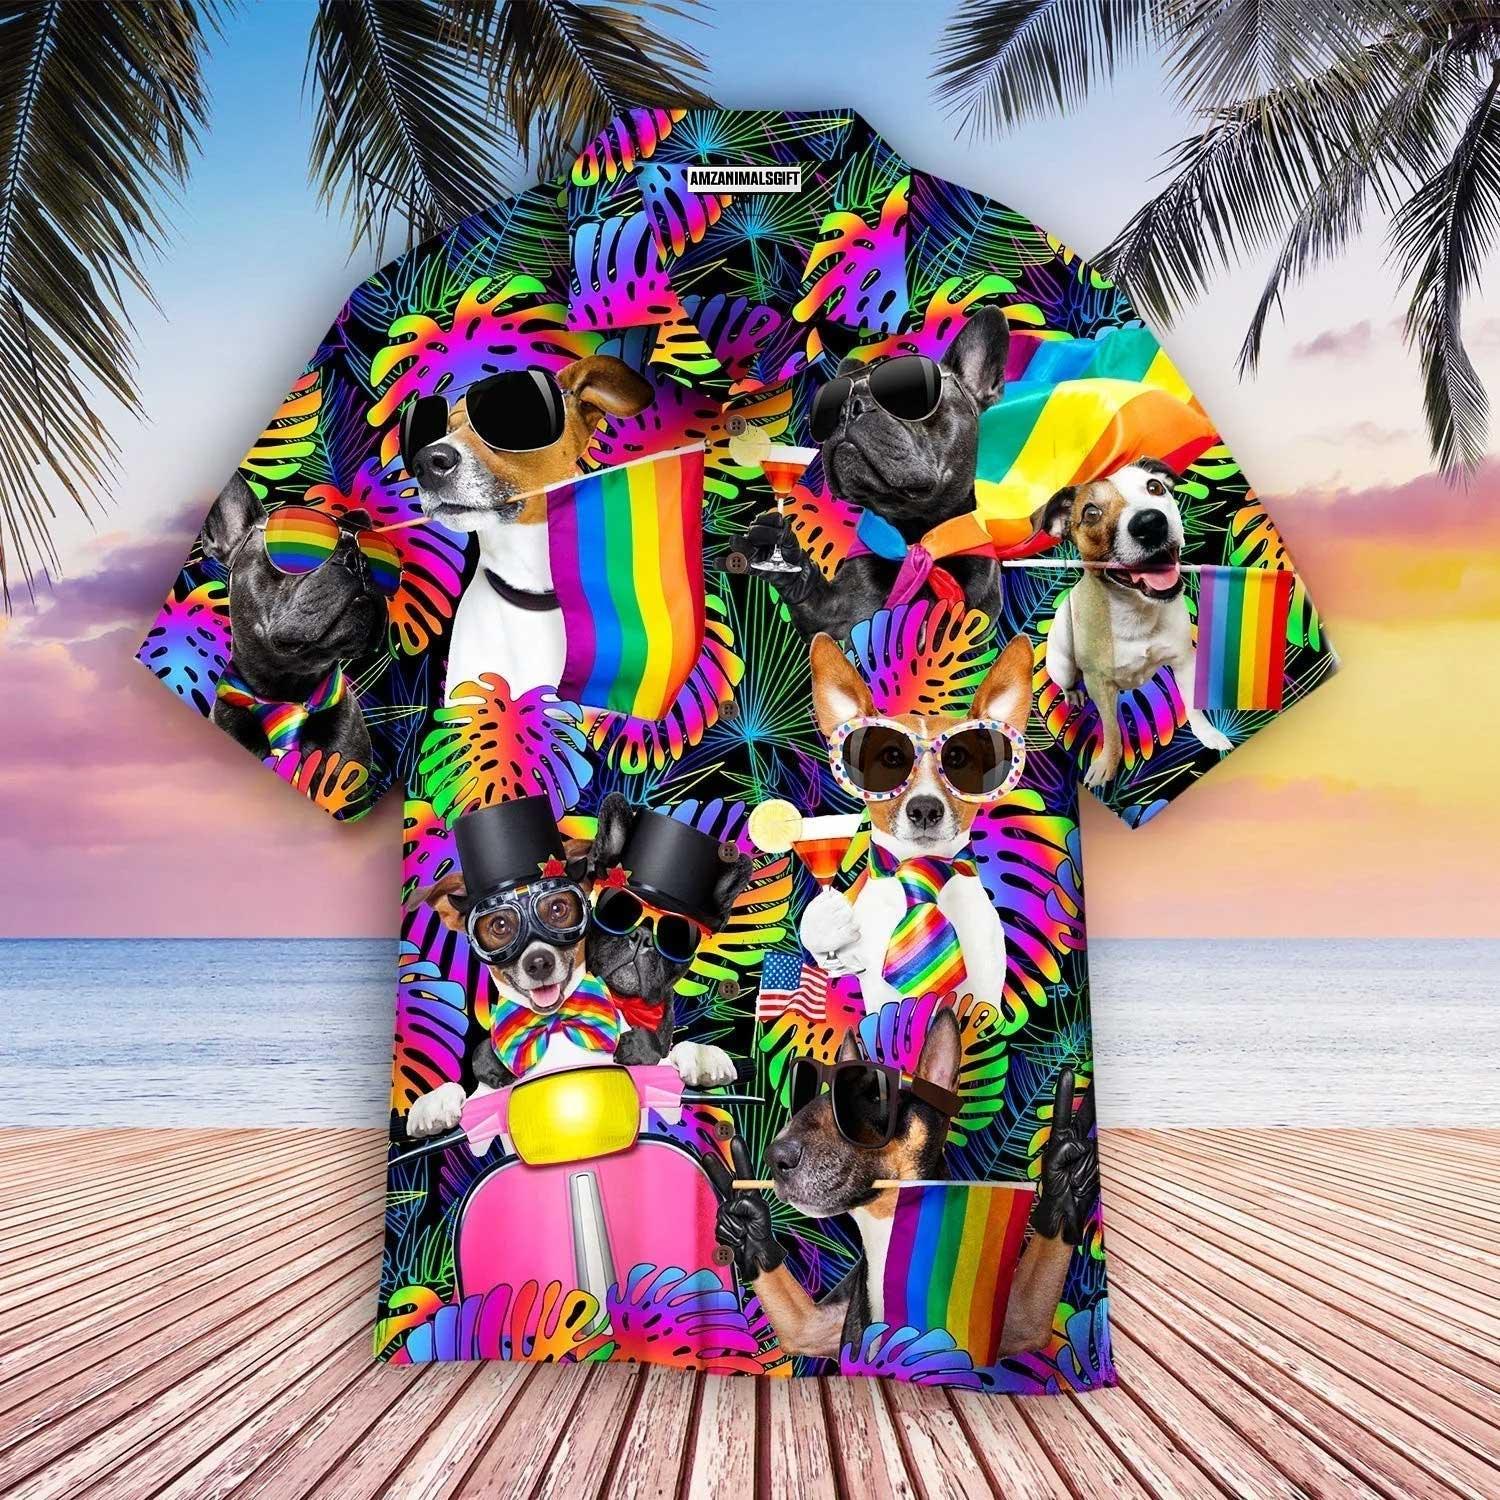 LGBT And Dog Aloha Hawaiian Shirts For Summer, Happy Dogs Pride Month Tropical Rainbow LGBT Hawaiian Shirts For Men Women, Gift For Friend, Dog Lovers - Amzanimalsgift